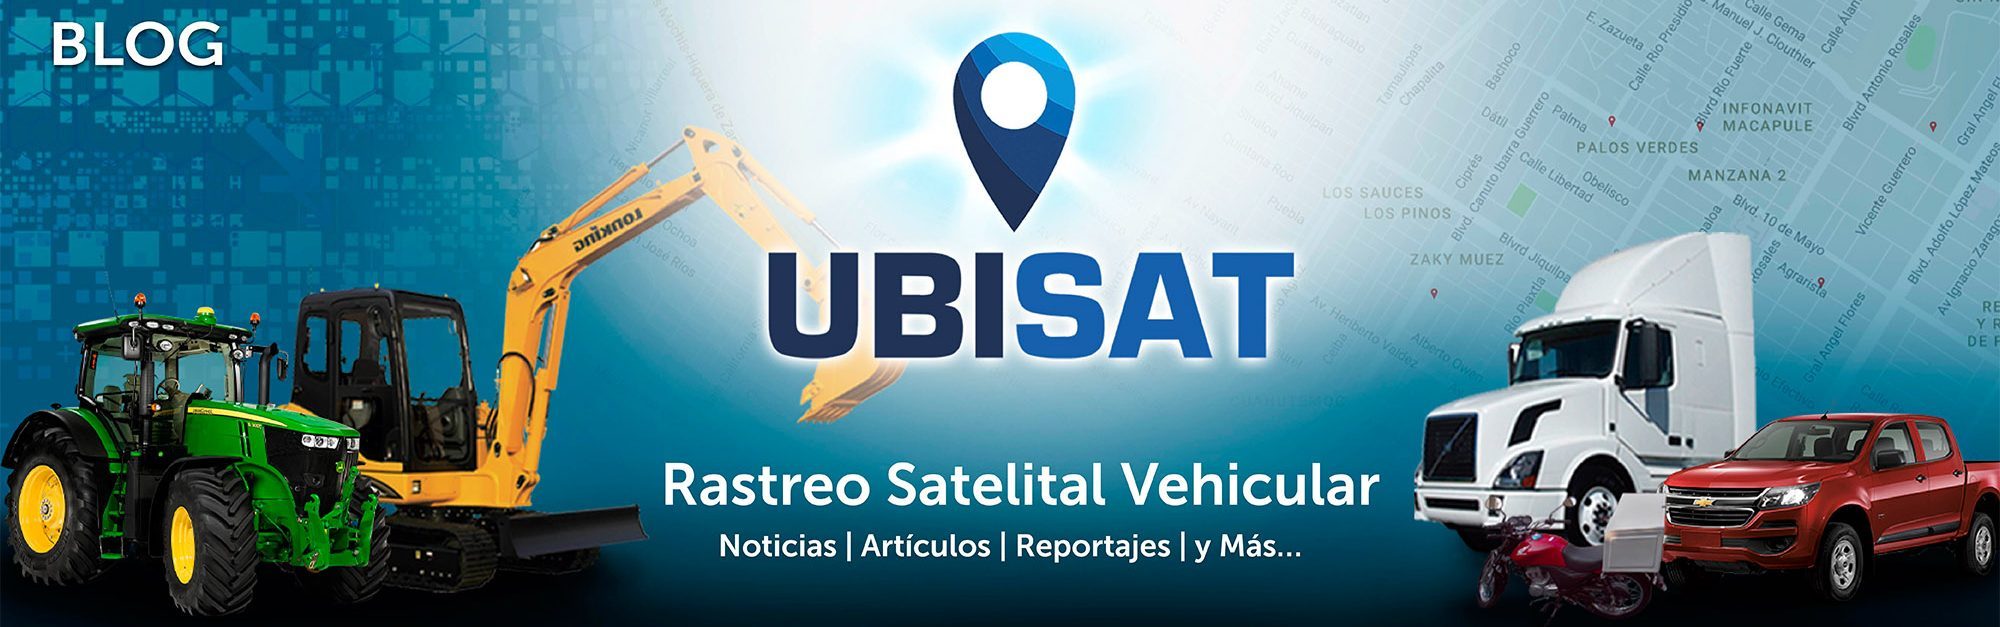 Ubisat | Control y Monitoreo Satelital